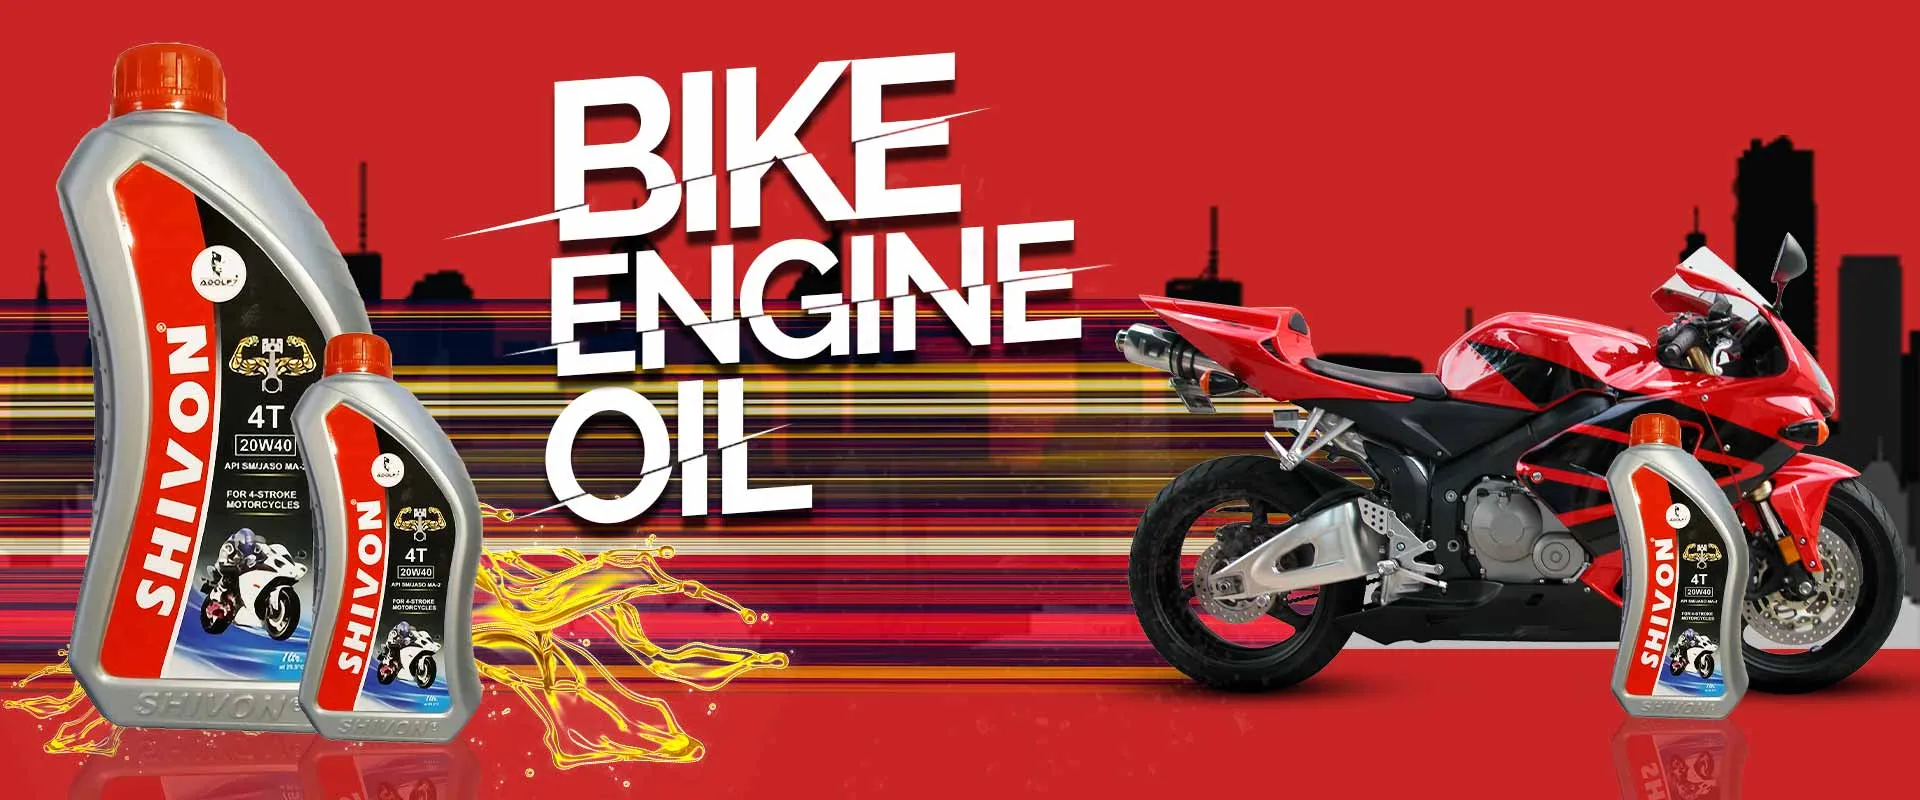 Bike Engine Oil In Sulanggari